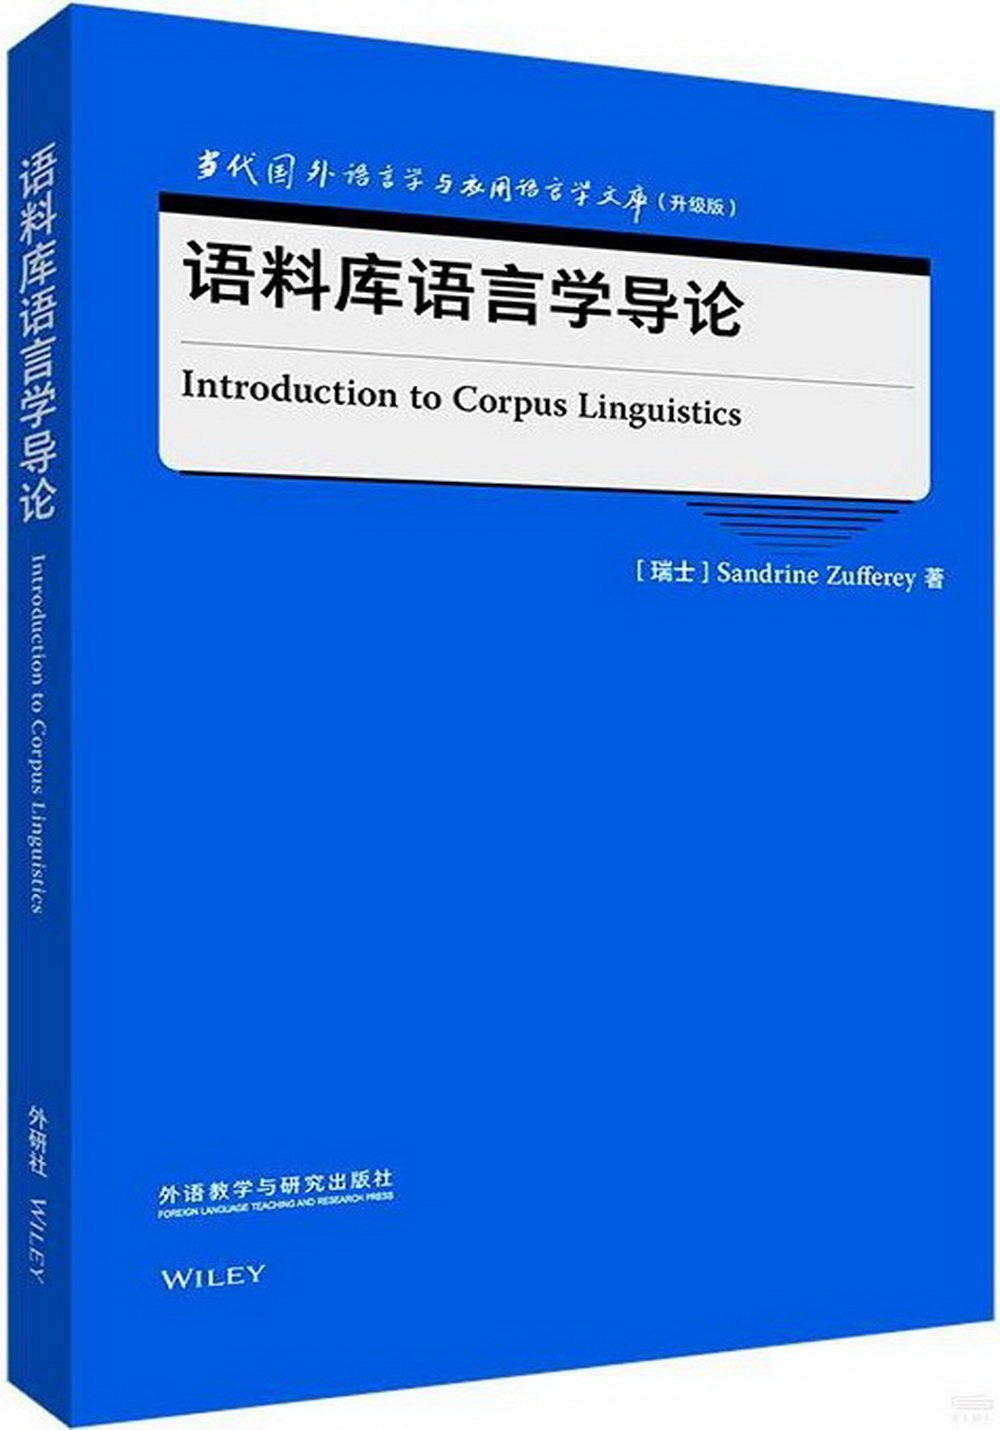 語料庫語言學導論（英文）=Introduction to Corpus Linguistics